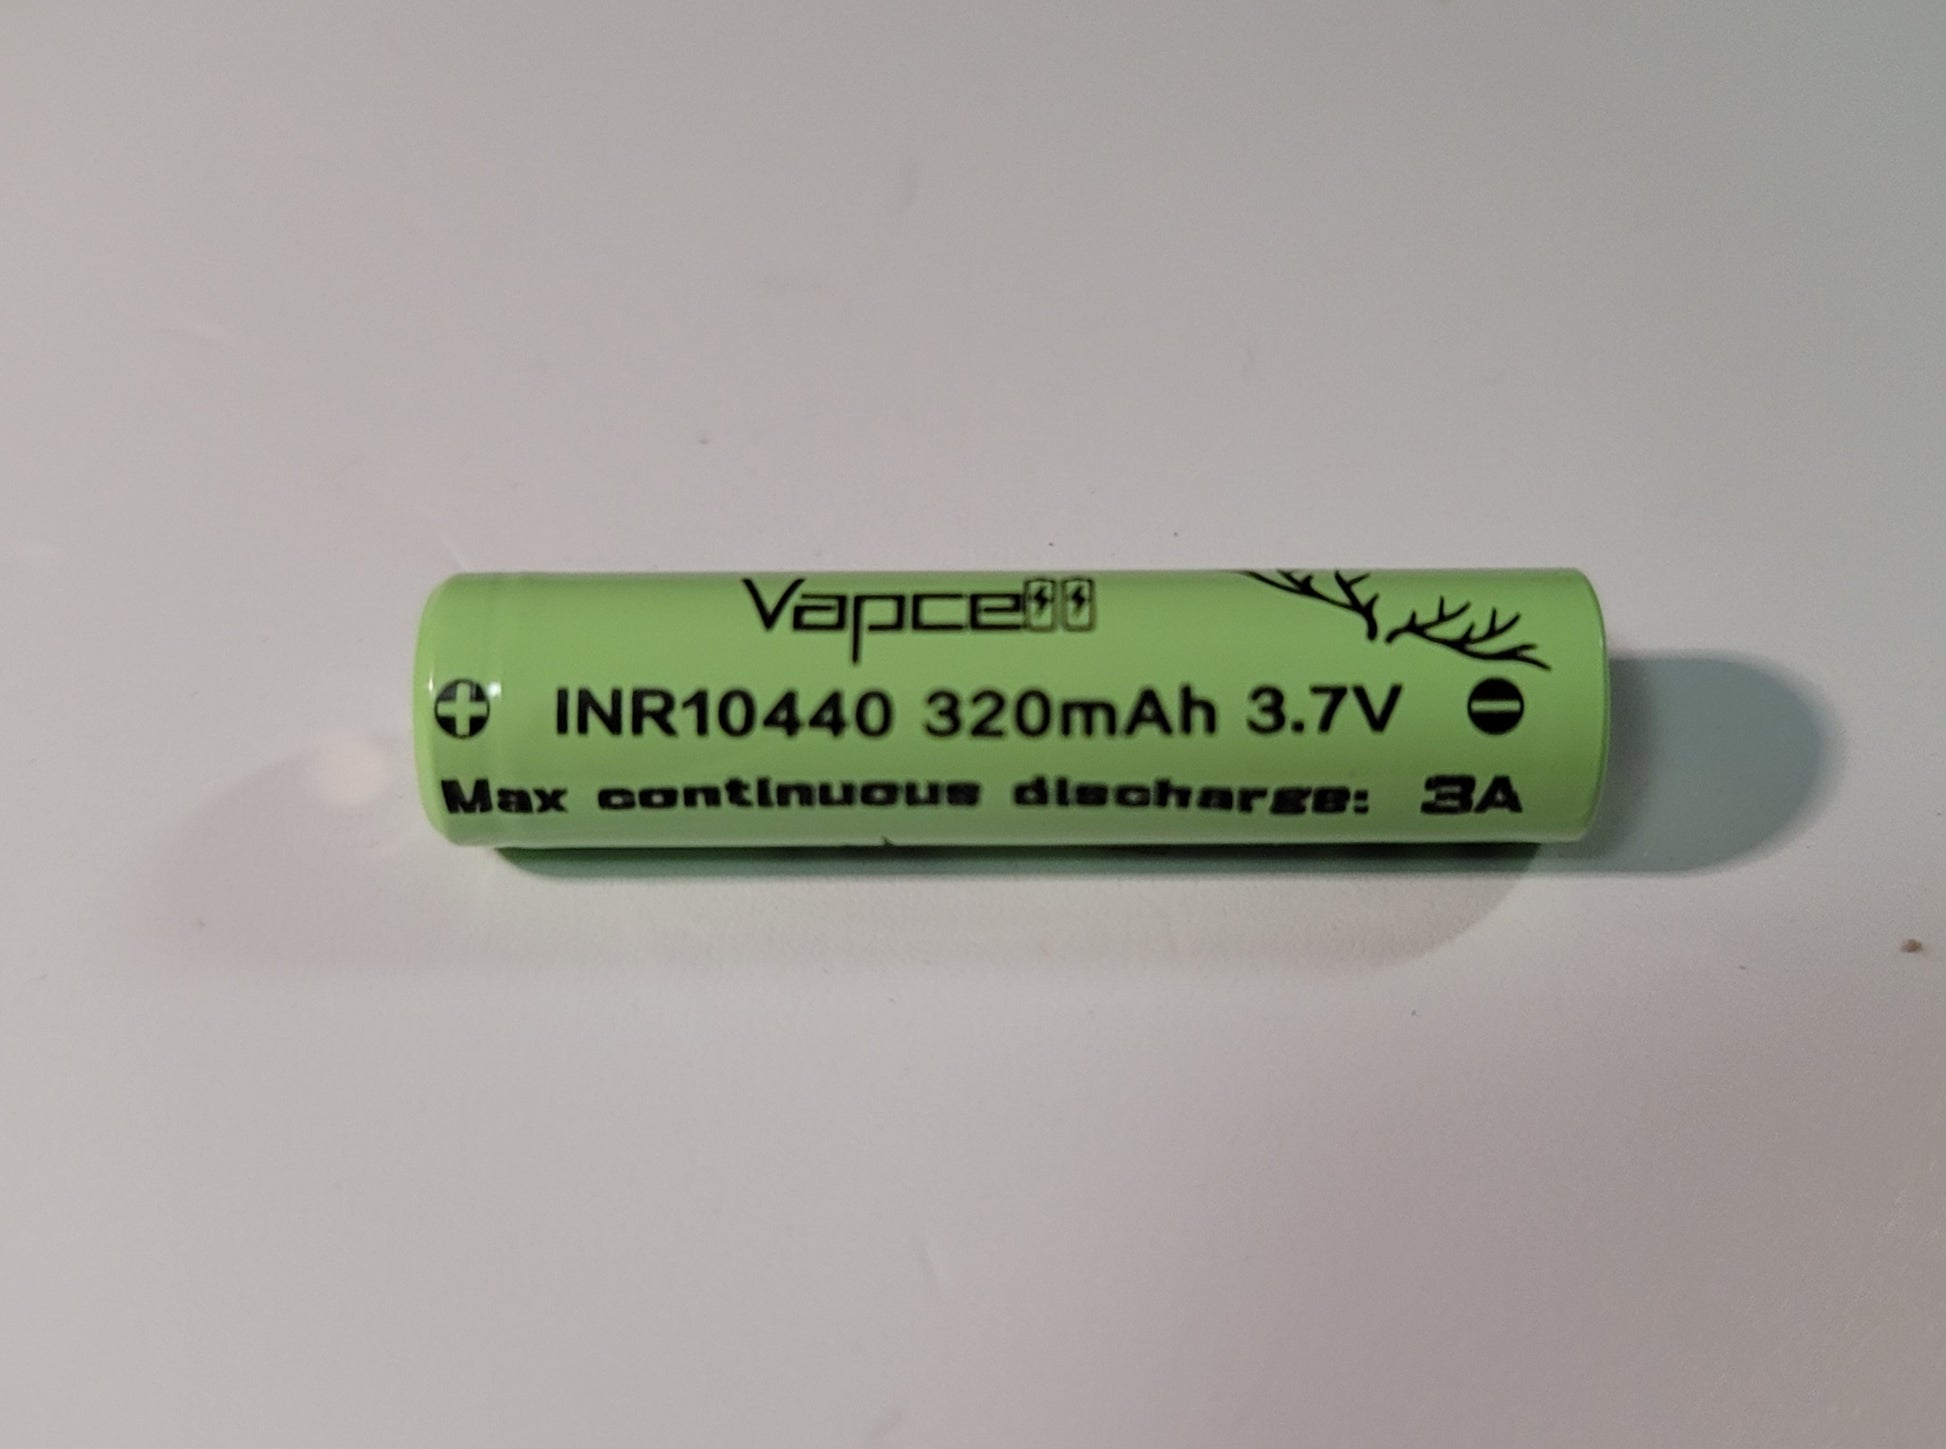 Lumintop GT Nano 10440 Extension Tube + 10440 Battery